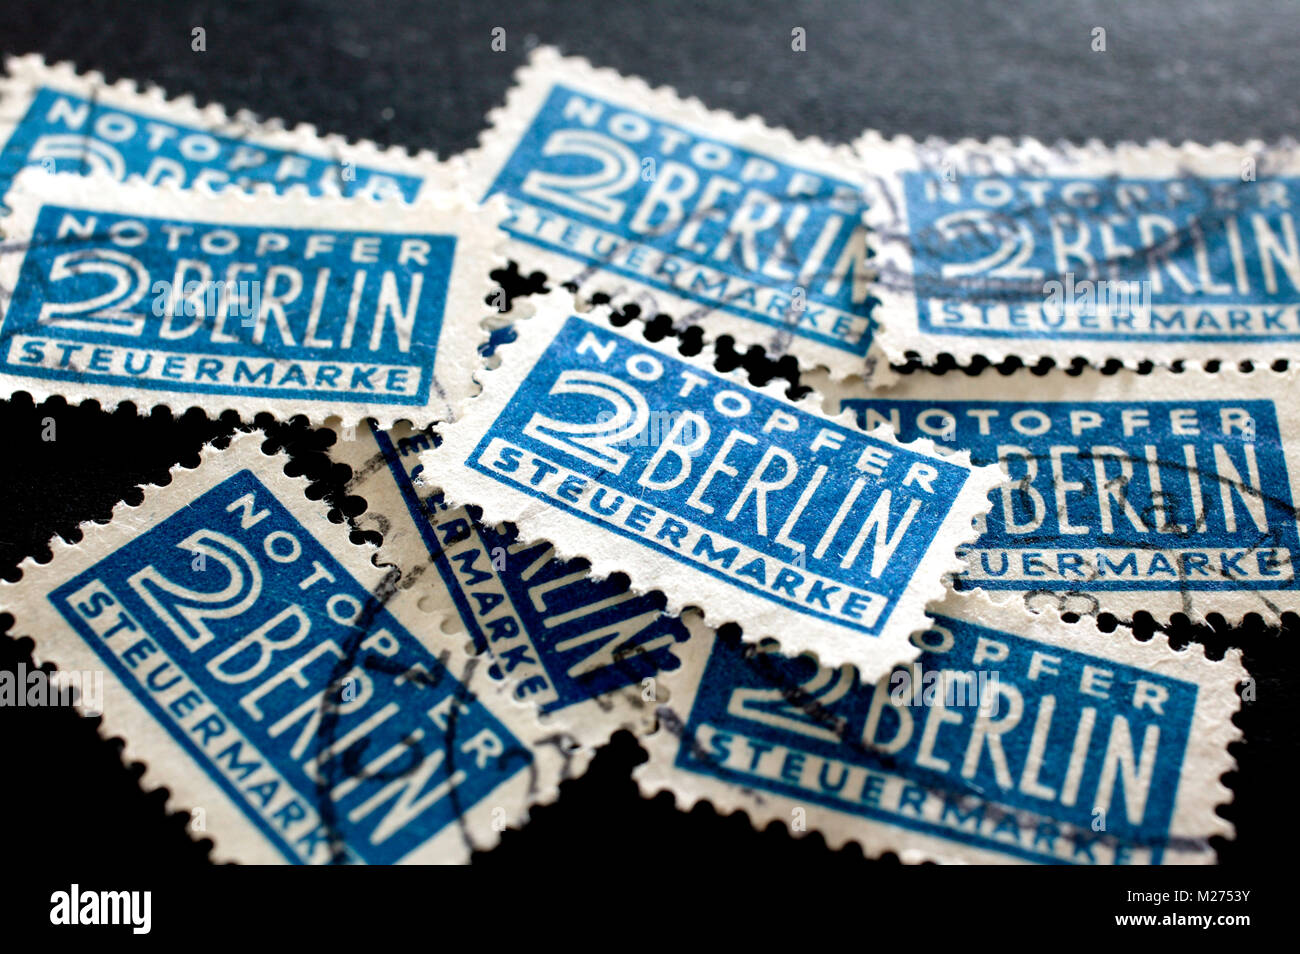 Historical stamps, Notopfer Berlin, Germany Stock Photo